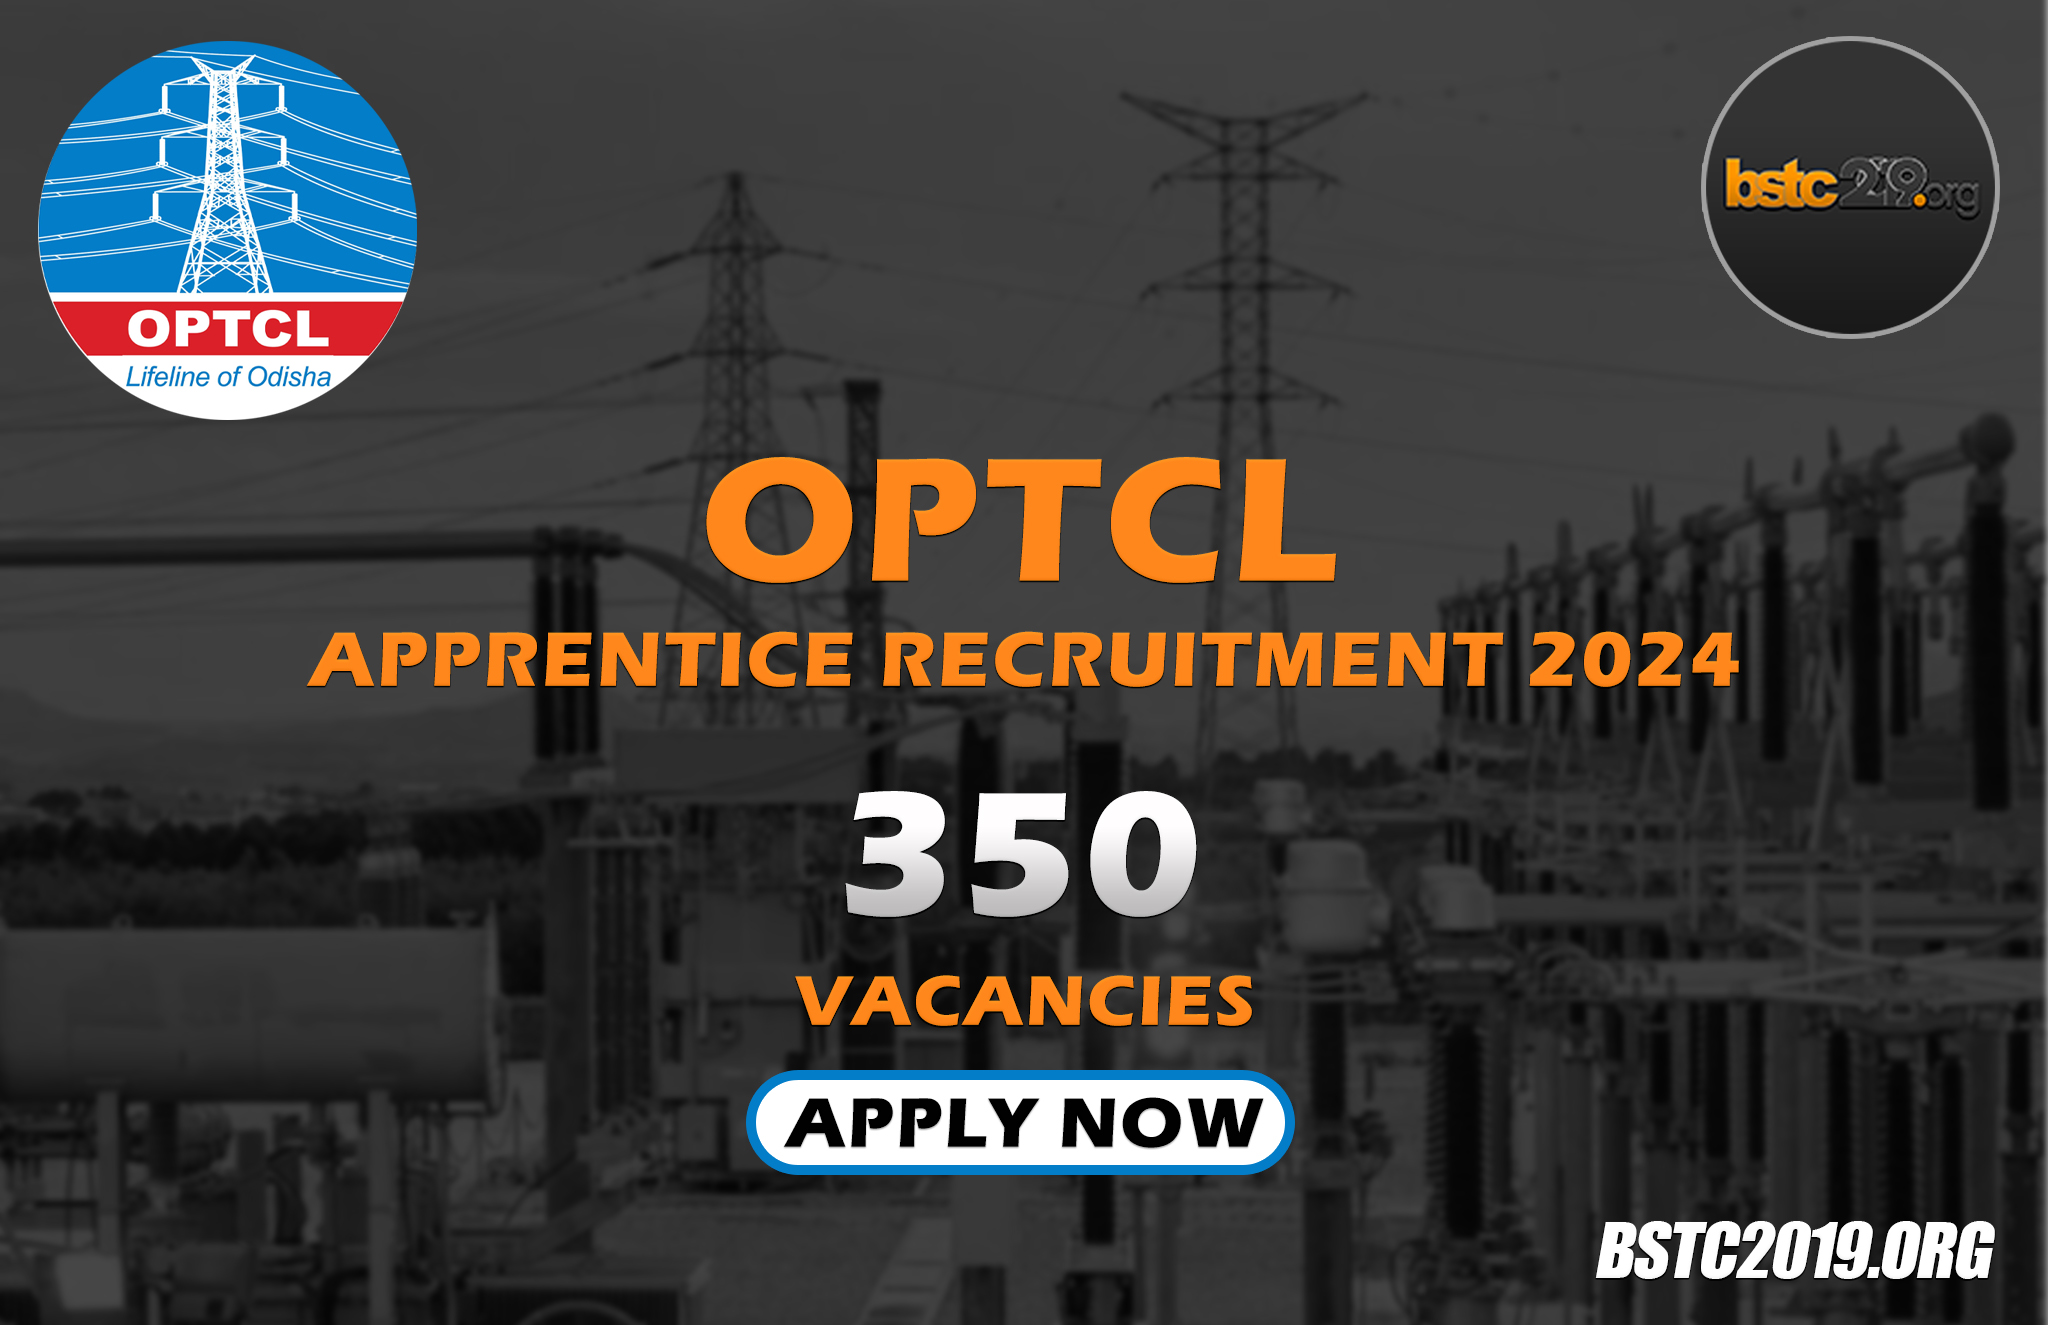 OPTCL apprentice recruitment 2024